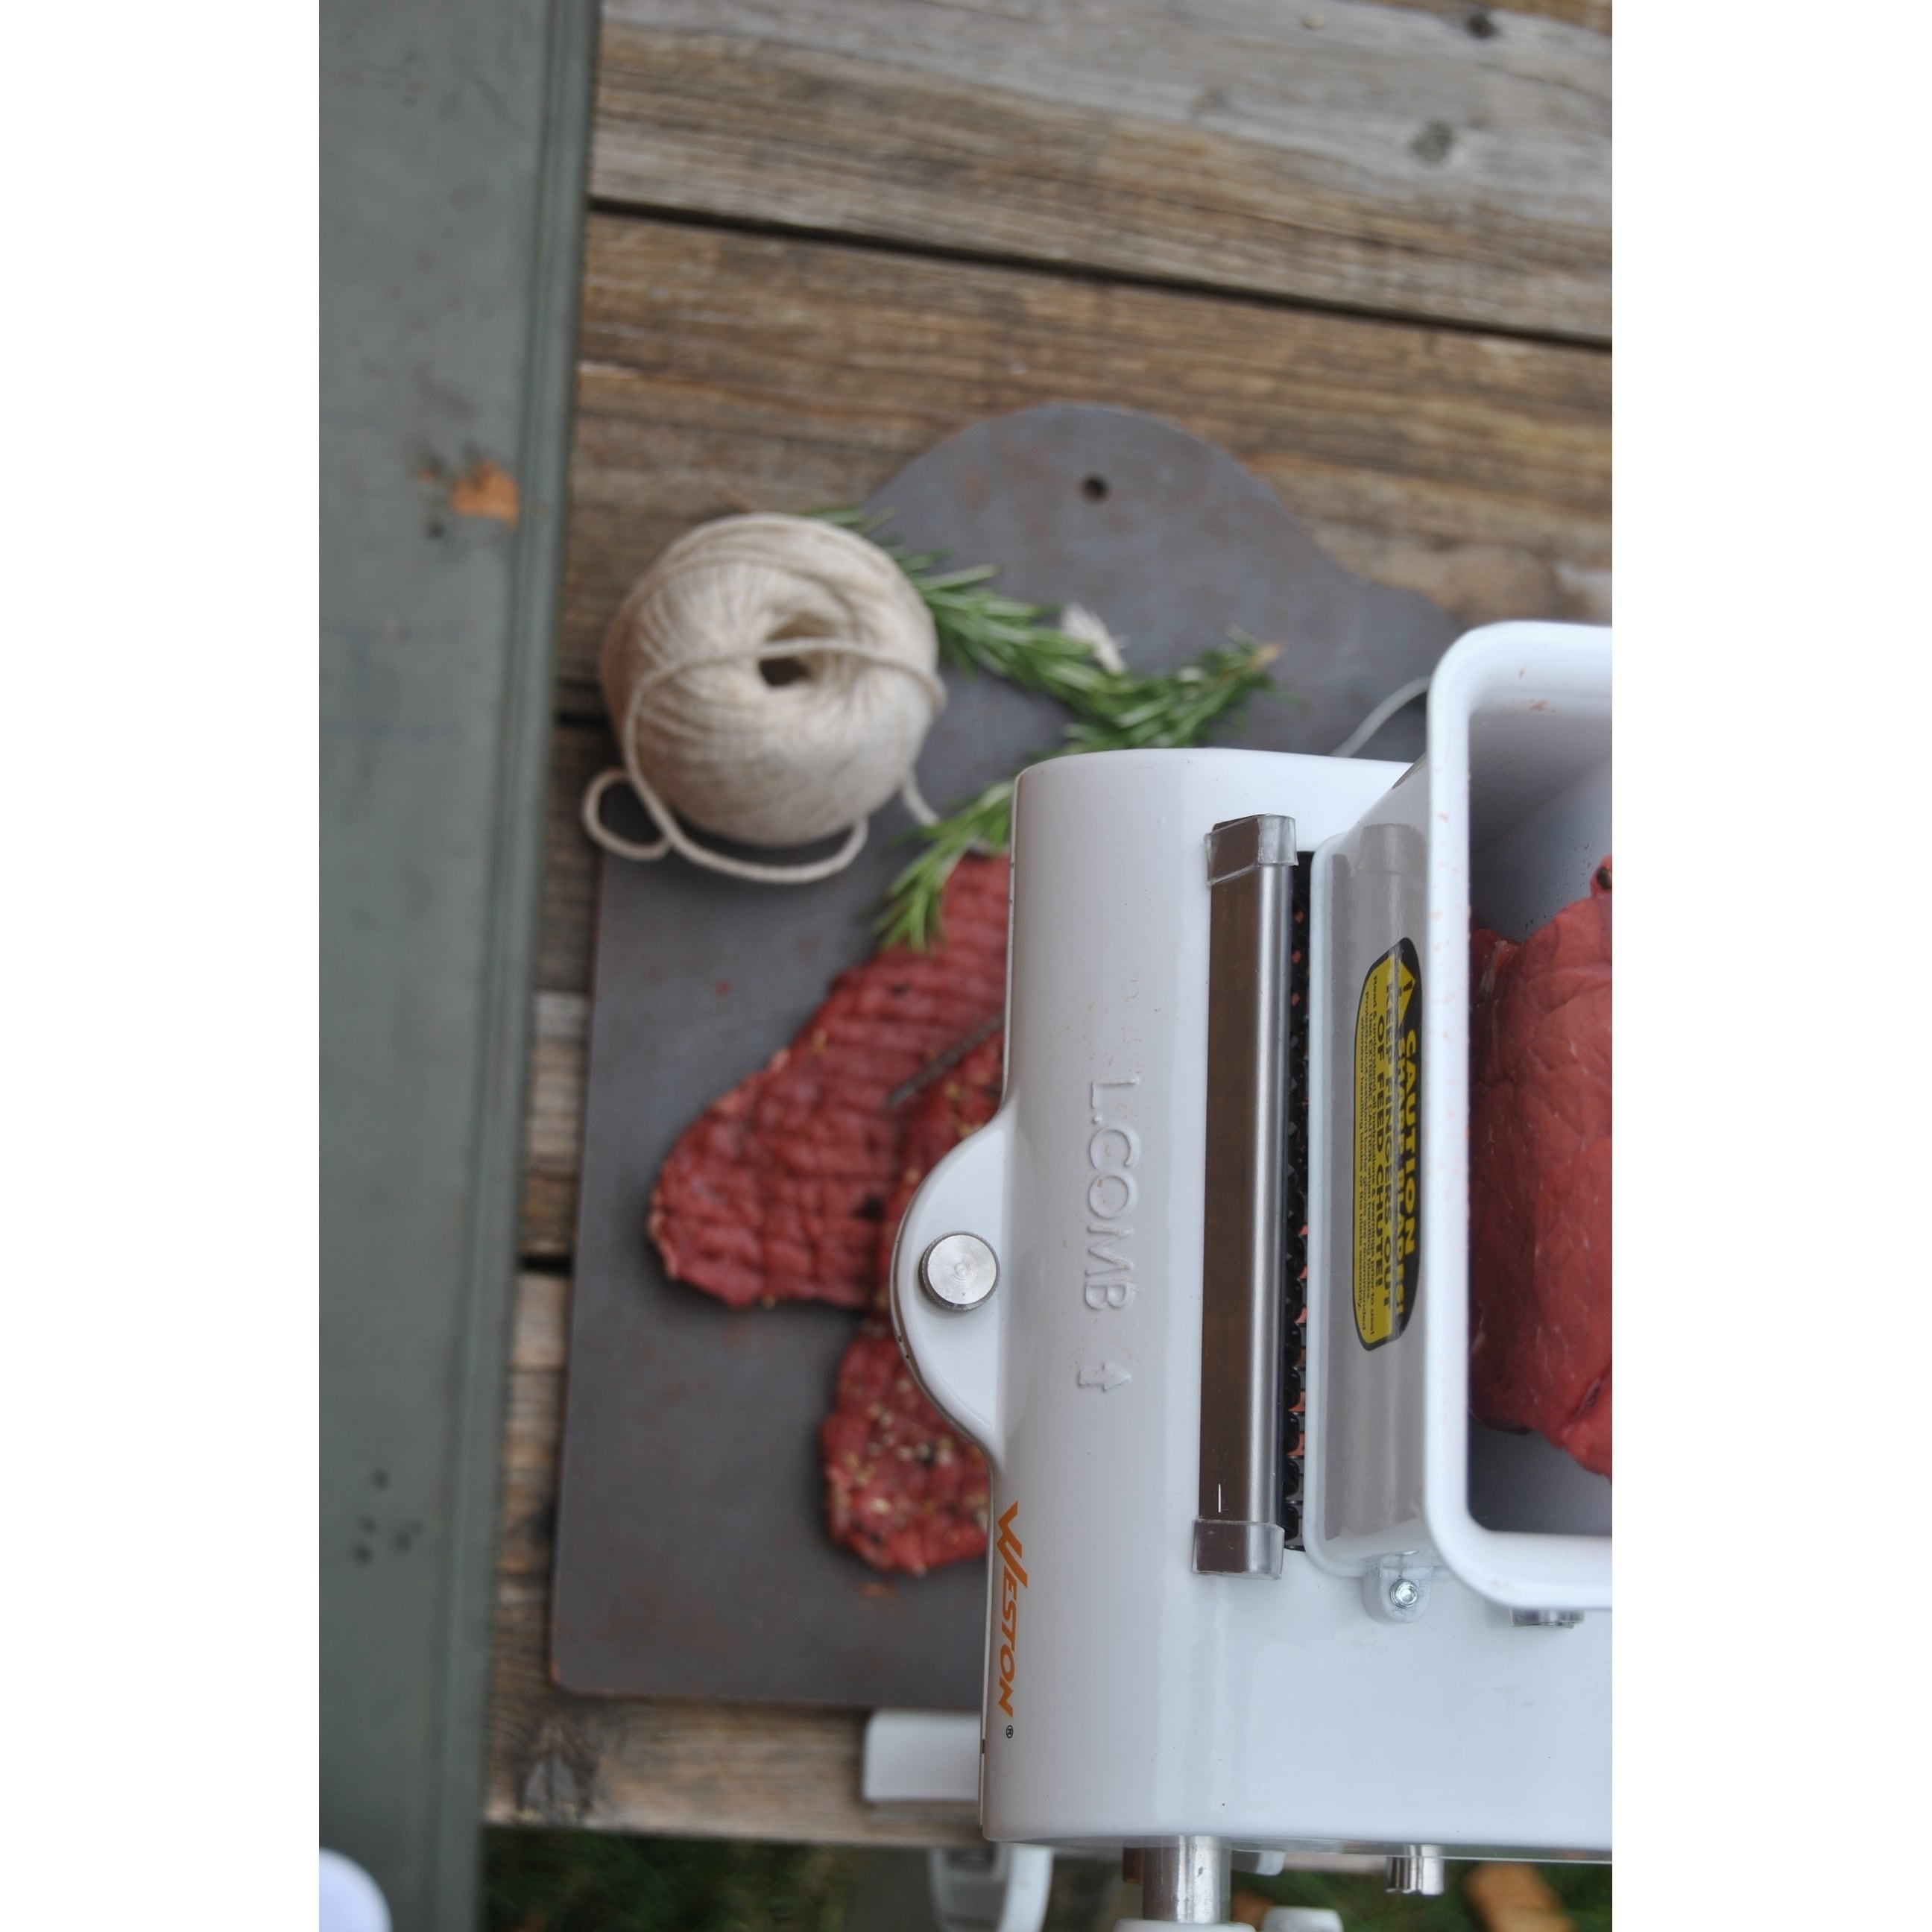 Realtree Manual Meat Tenderizer & Jerky Slicer - Bed Bath & Beyond -  21685532